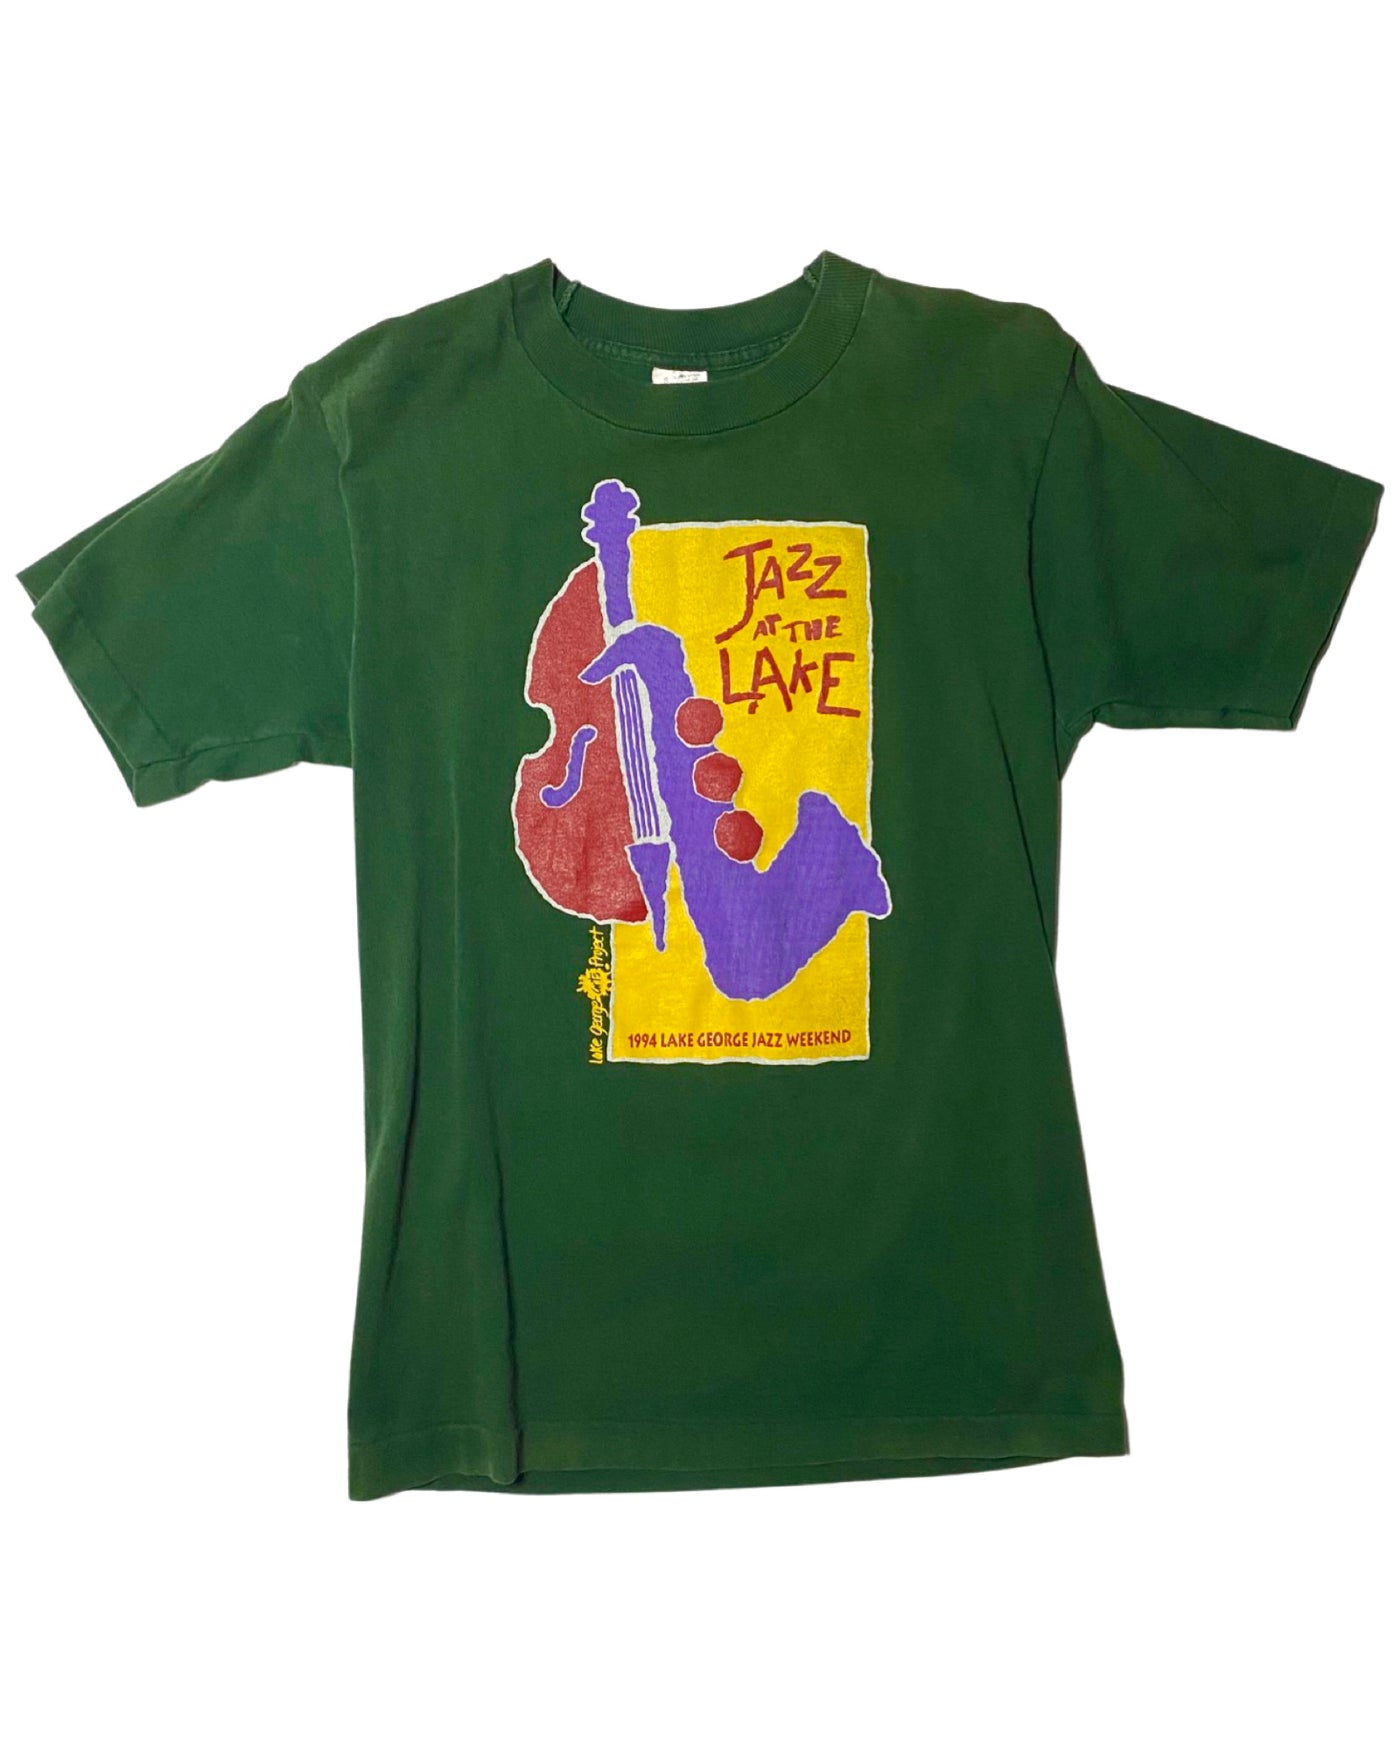 1994 Jazz Fest on the Lake T-Shirt